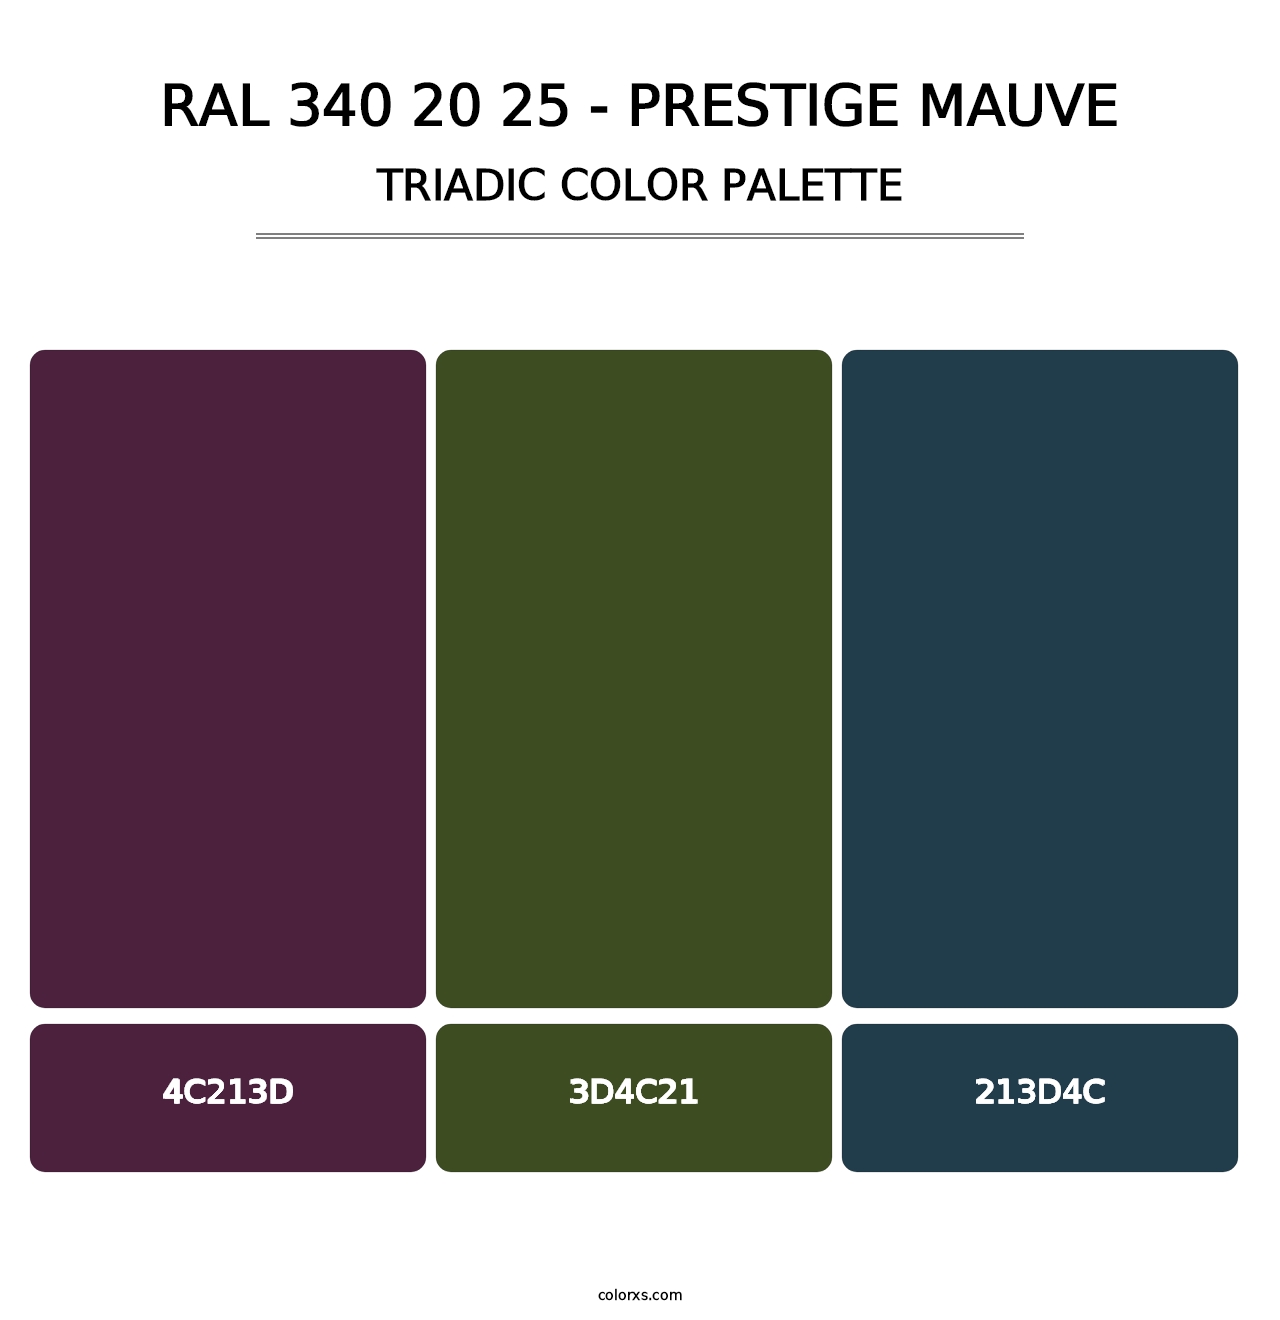 RAL 340 20 25 - Prestige Mauve - Triadic Color Palette